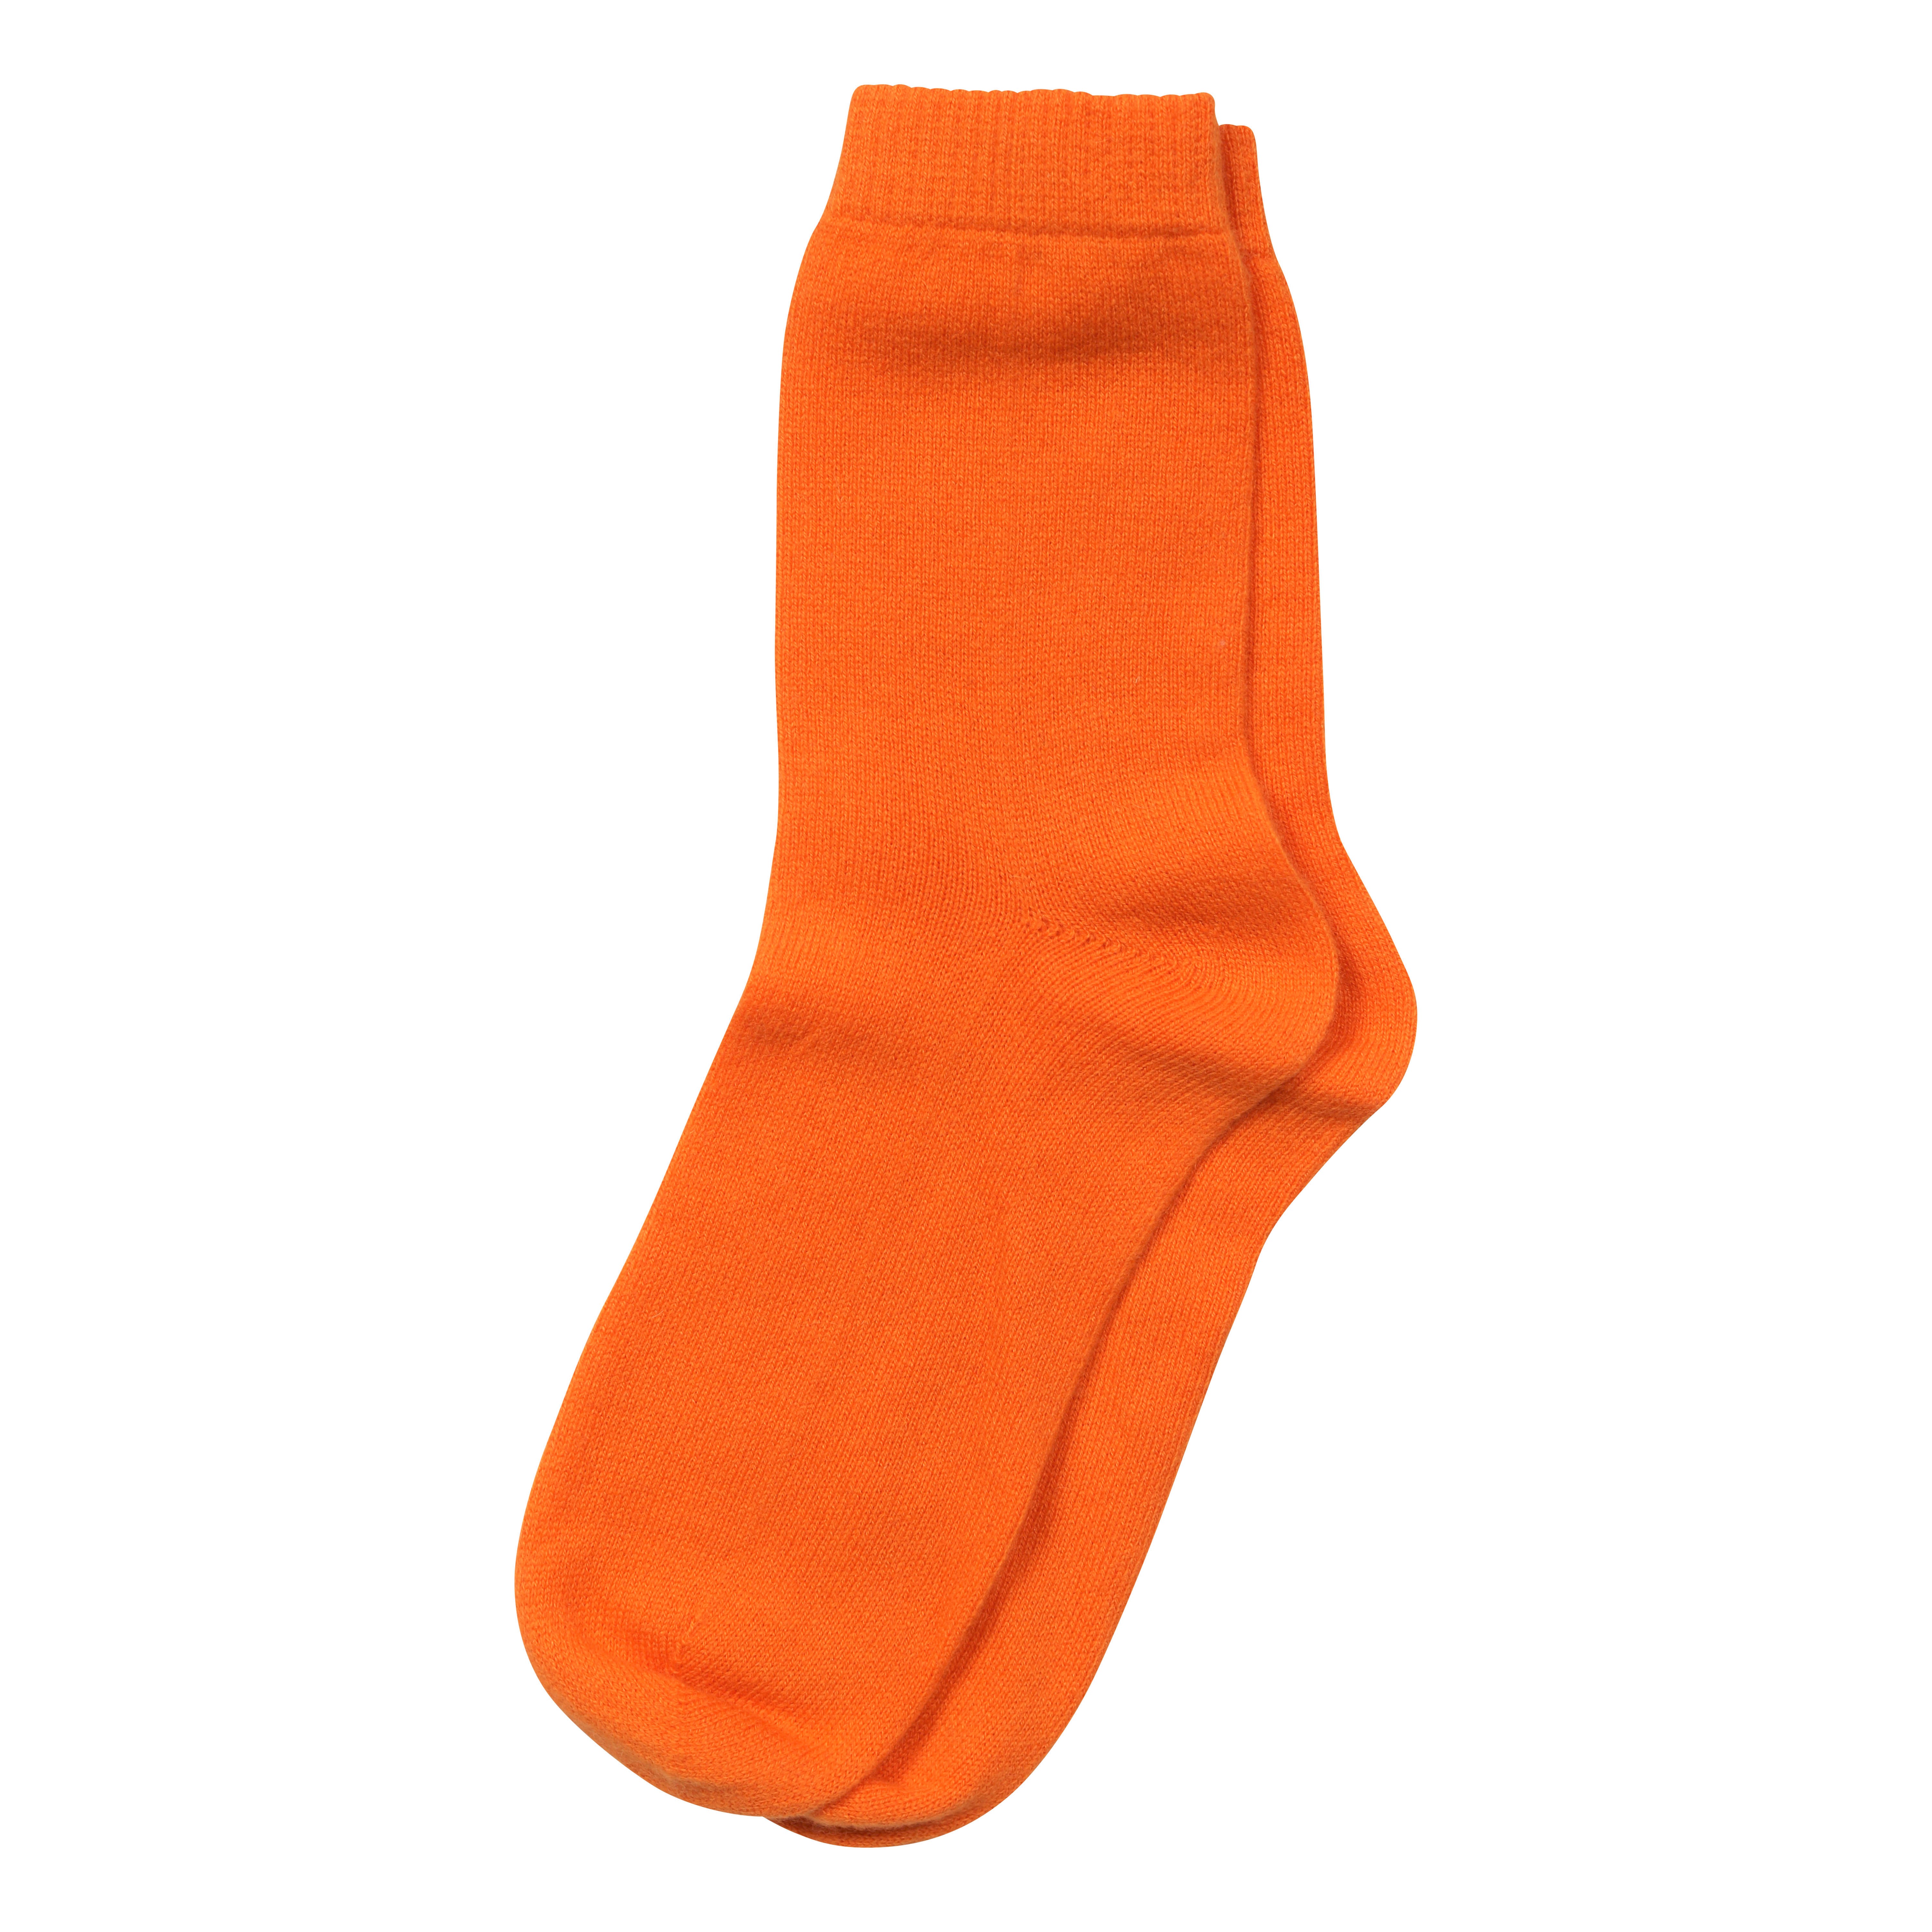 Jumper1234 Cashmere Socks in Orange